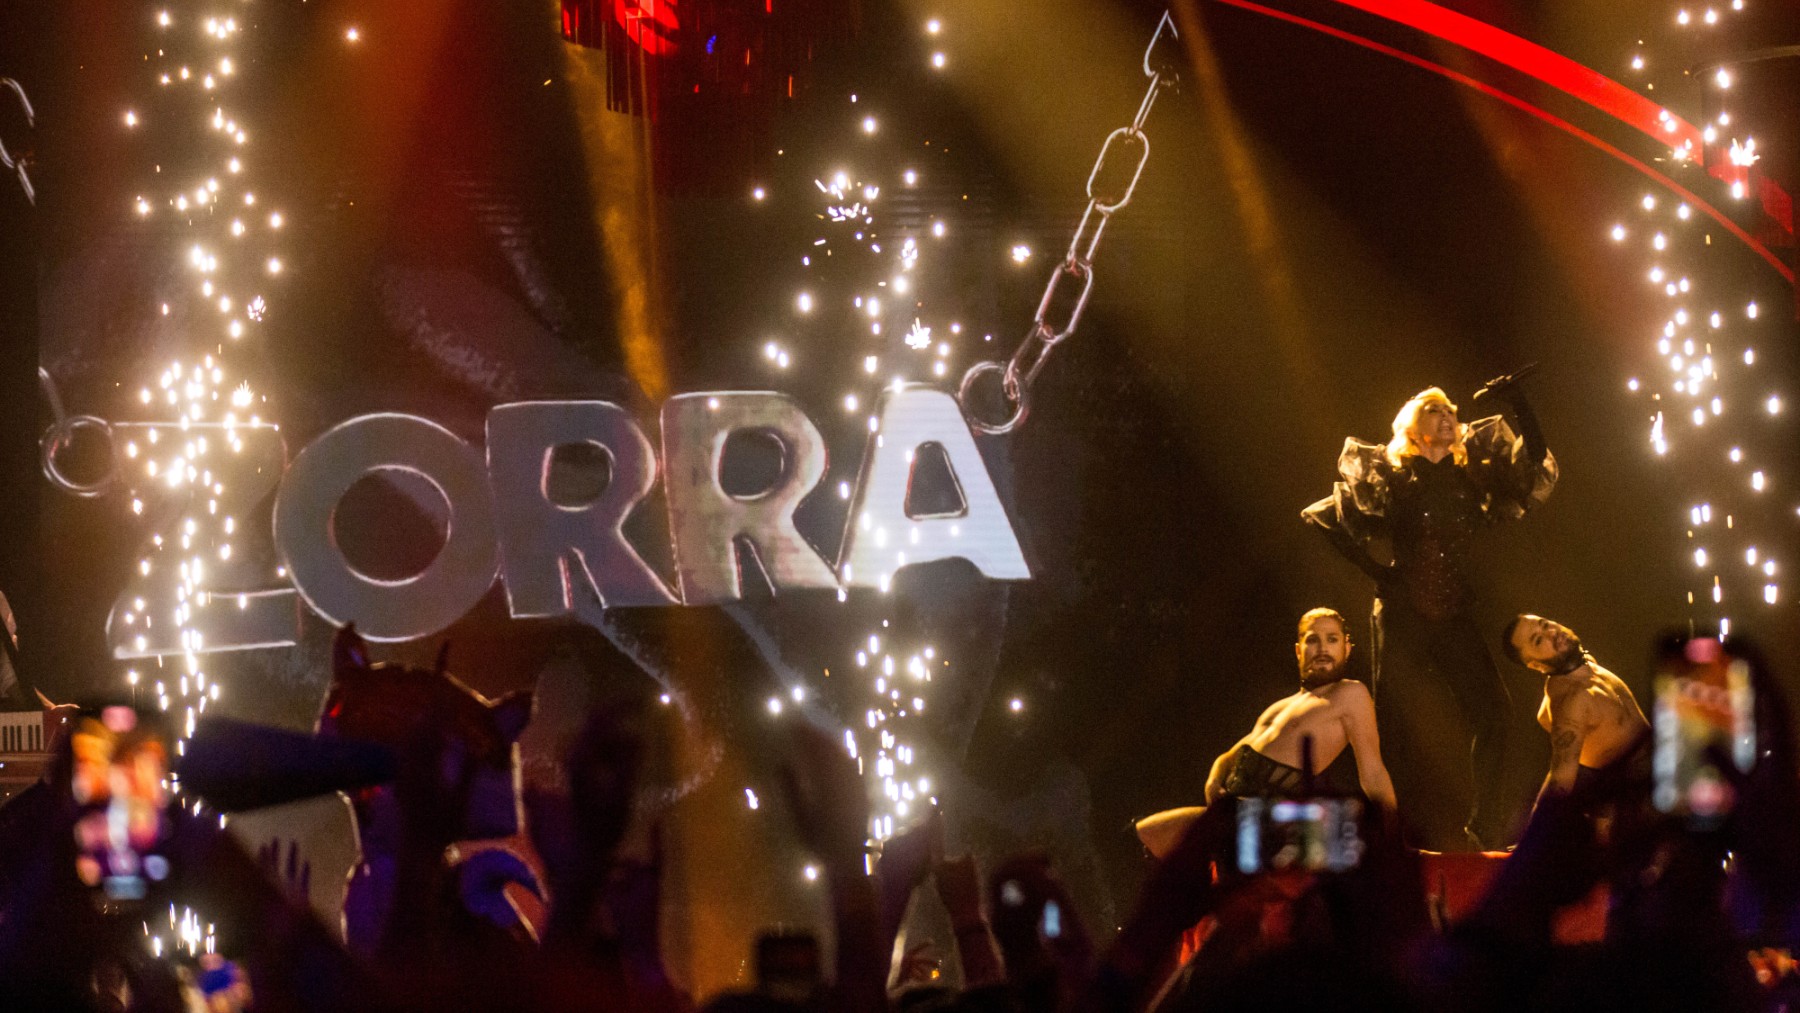 Nebulossa durante su actuación de ‘Zorra’ en Eurovisión.